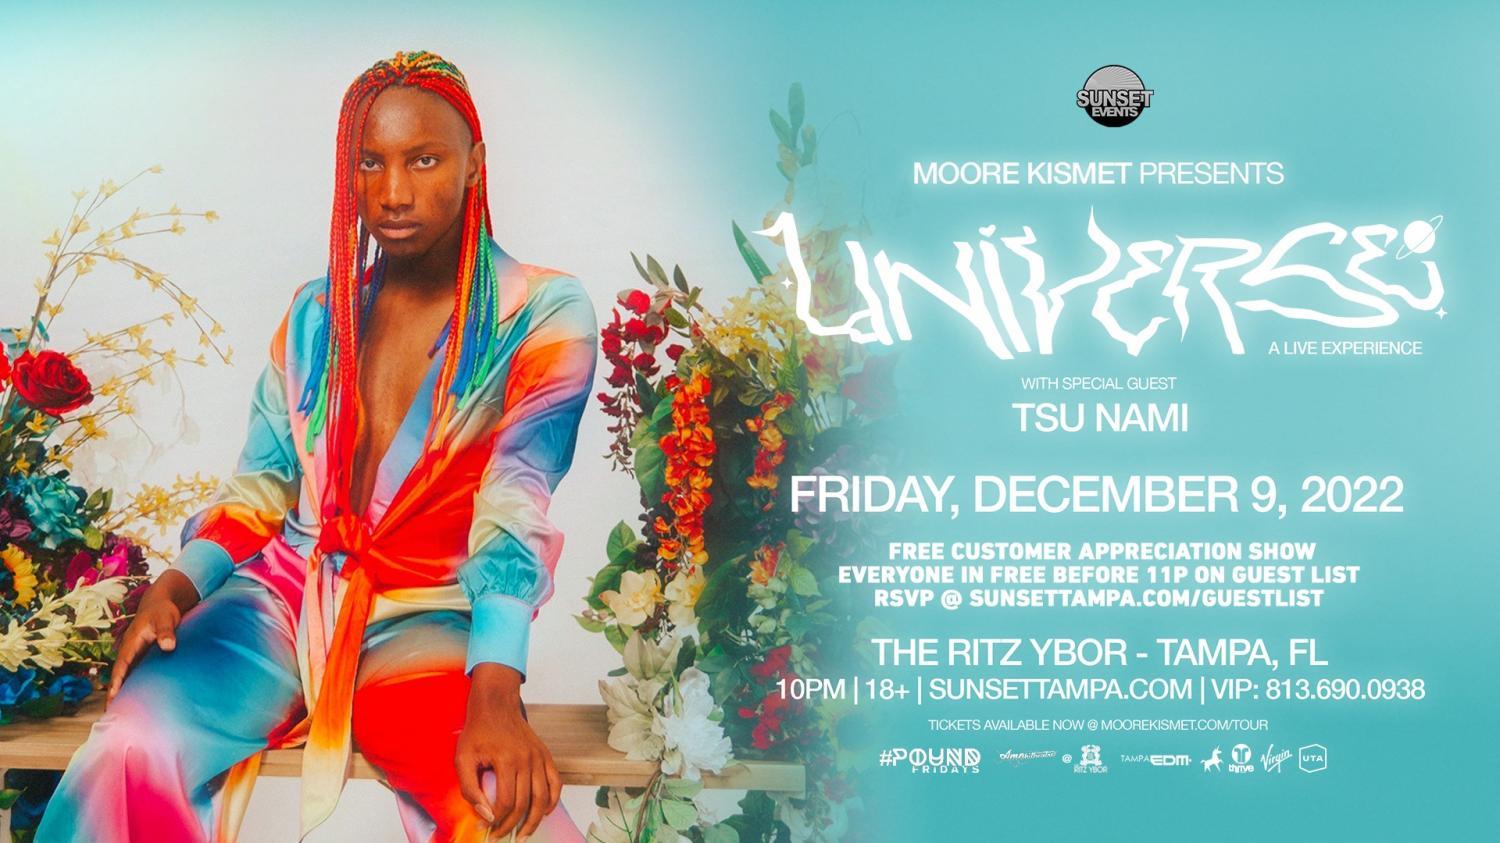 Moore Kismet presents Universe - a Live Experience - Tampa, FL
Fri Dec 9, 7:00 PM - Sat Dec 10, 12:00 AM
in 35 days